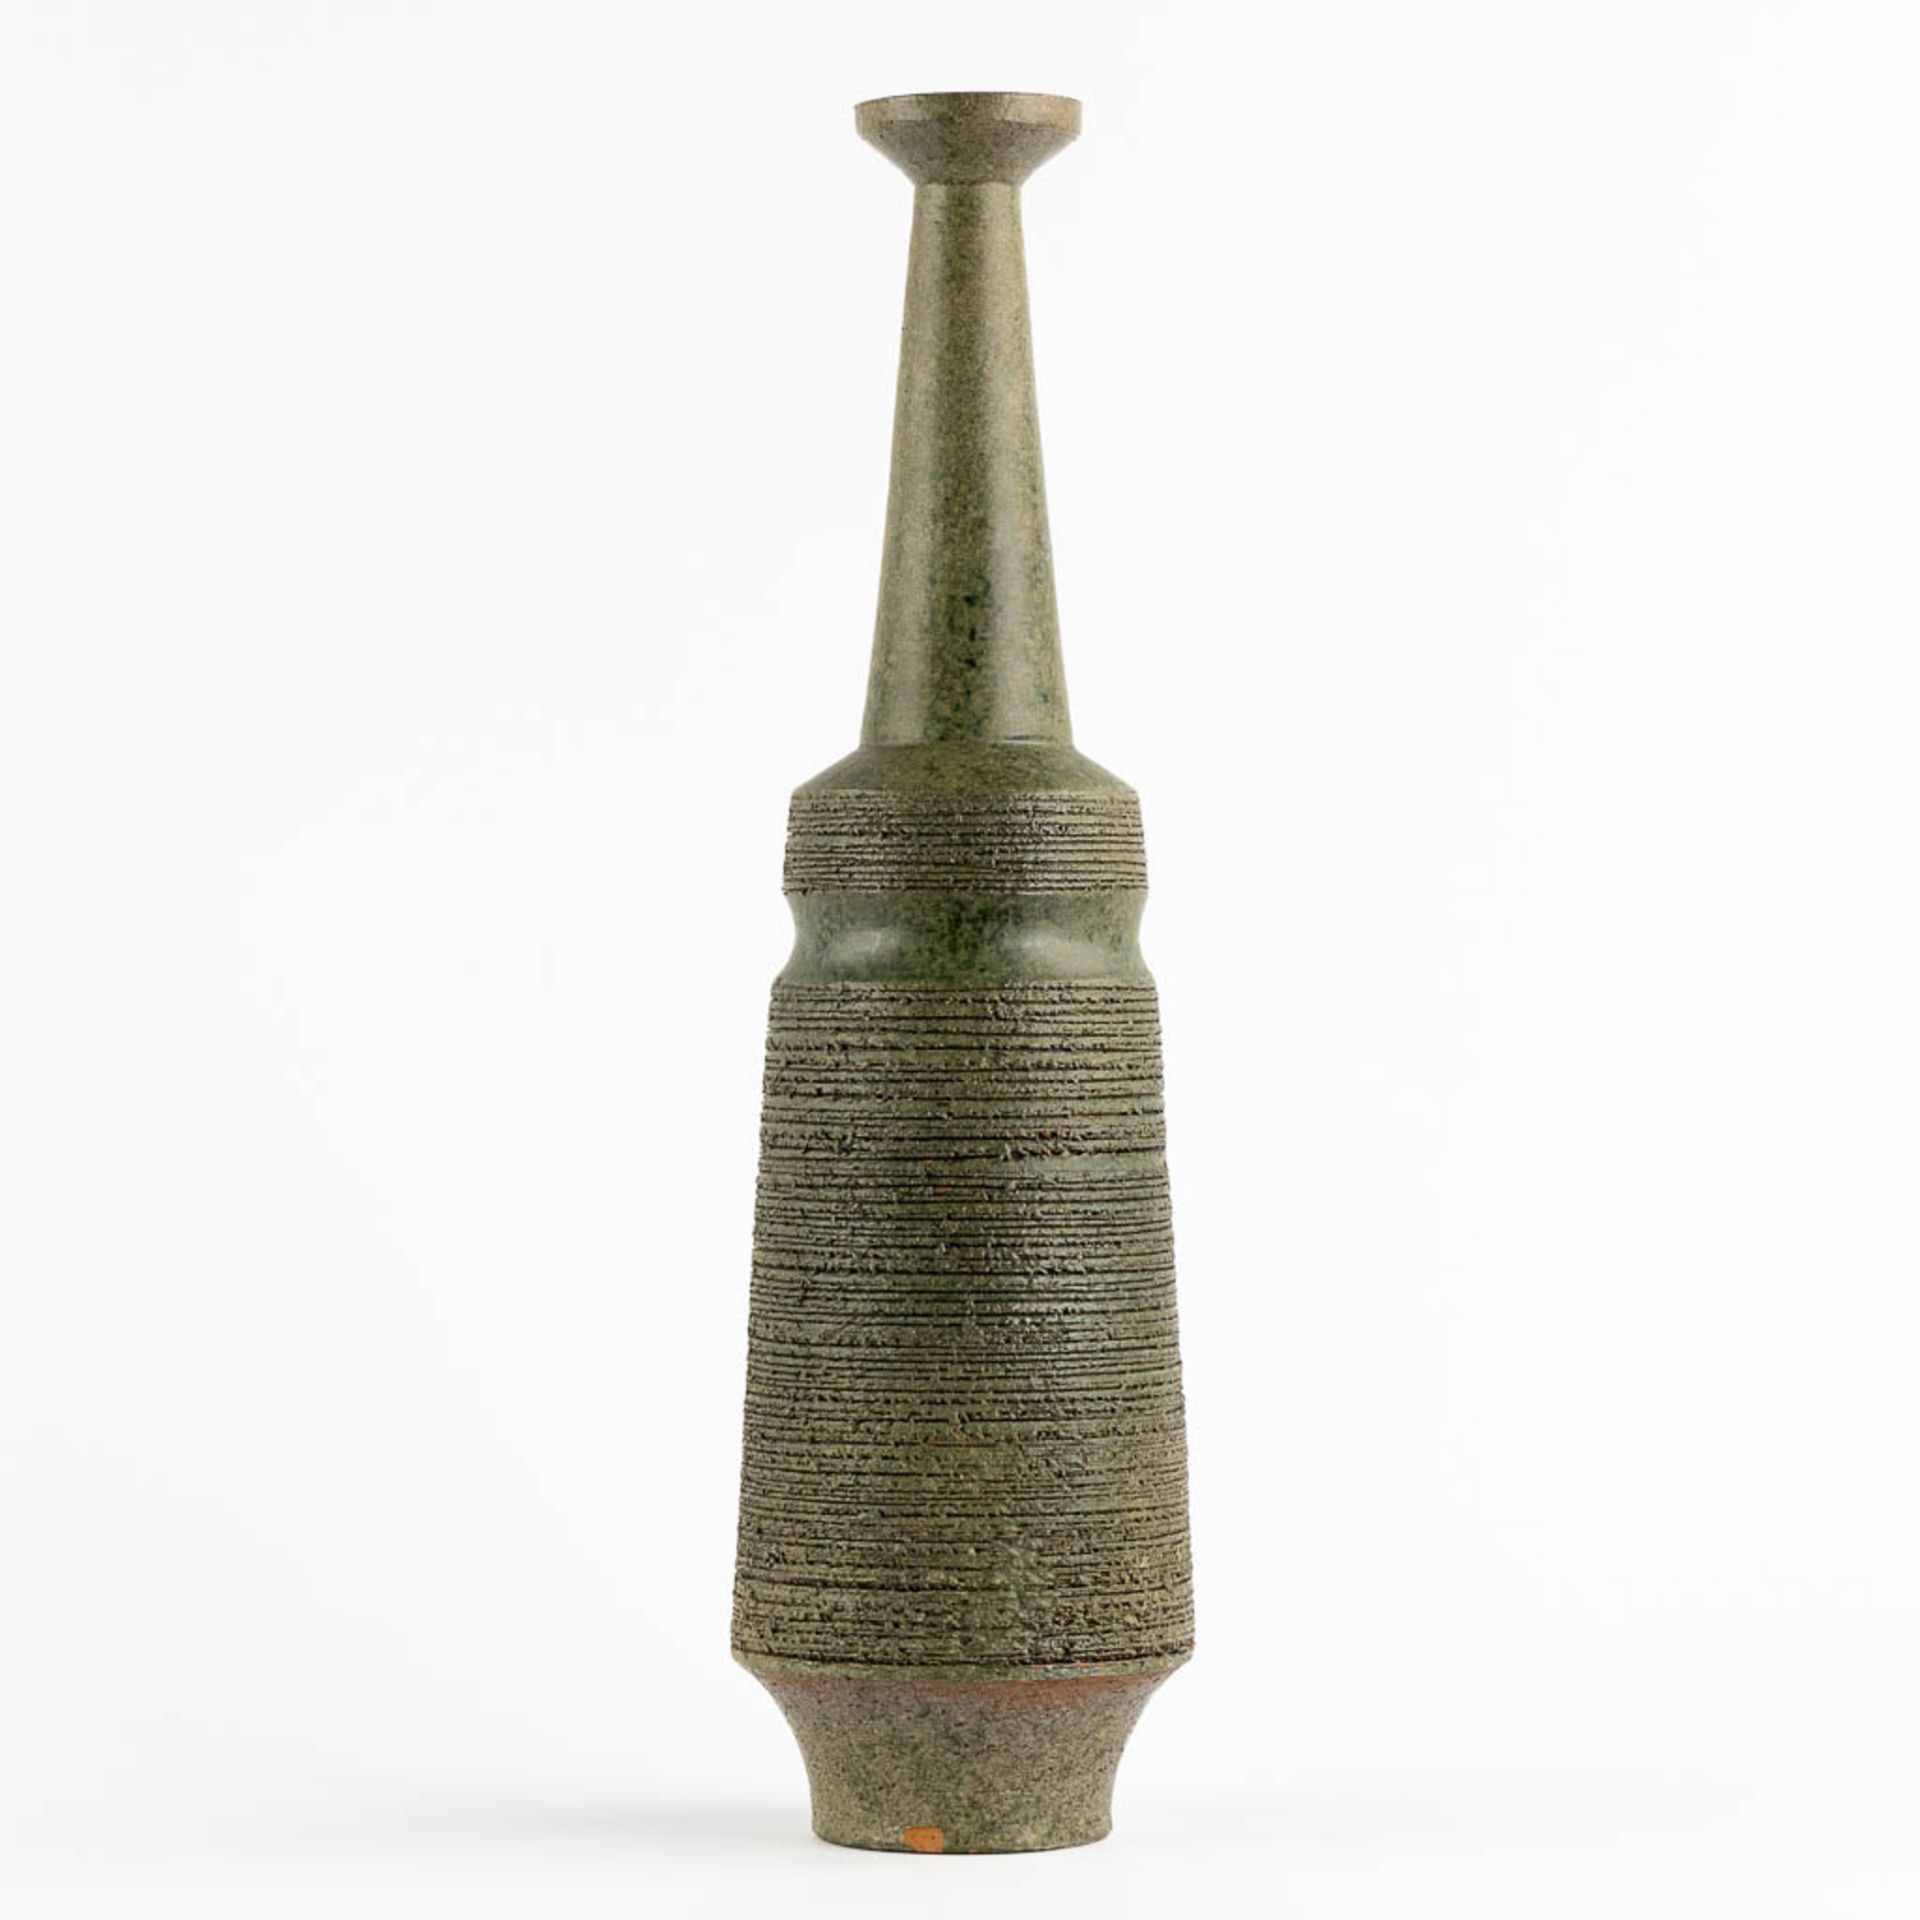 Amphora or Keramar, a large green vase, glazed ceramics. (H:53 x D:14 cm) - Bild 4 aus 10